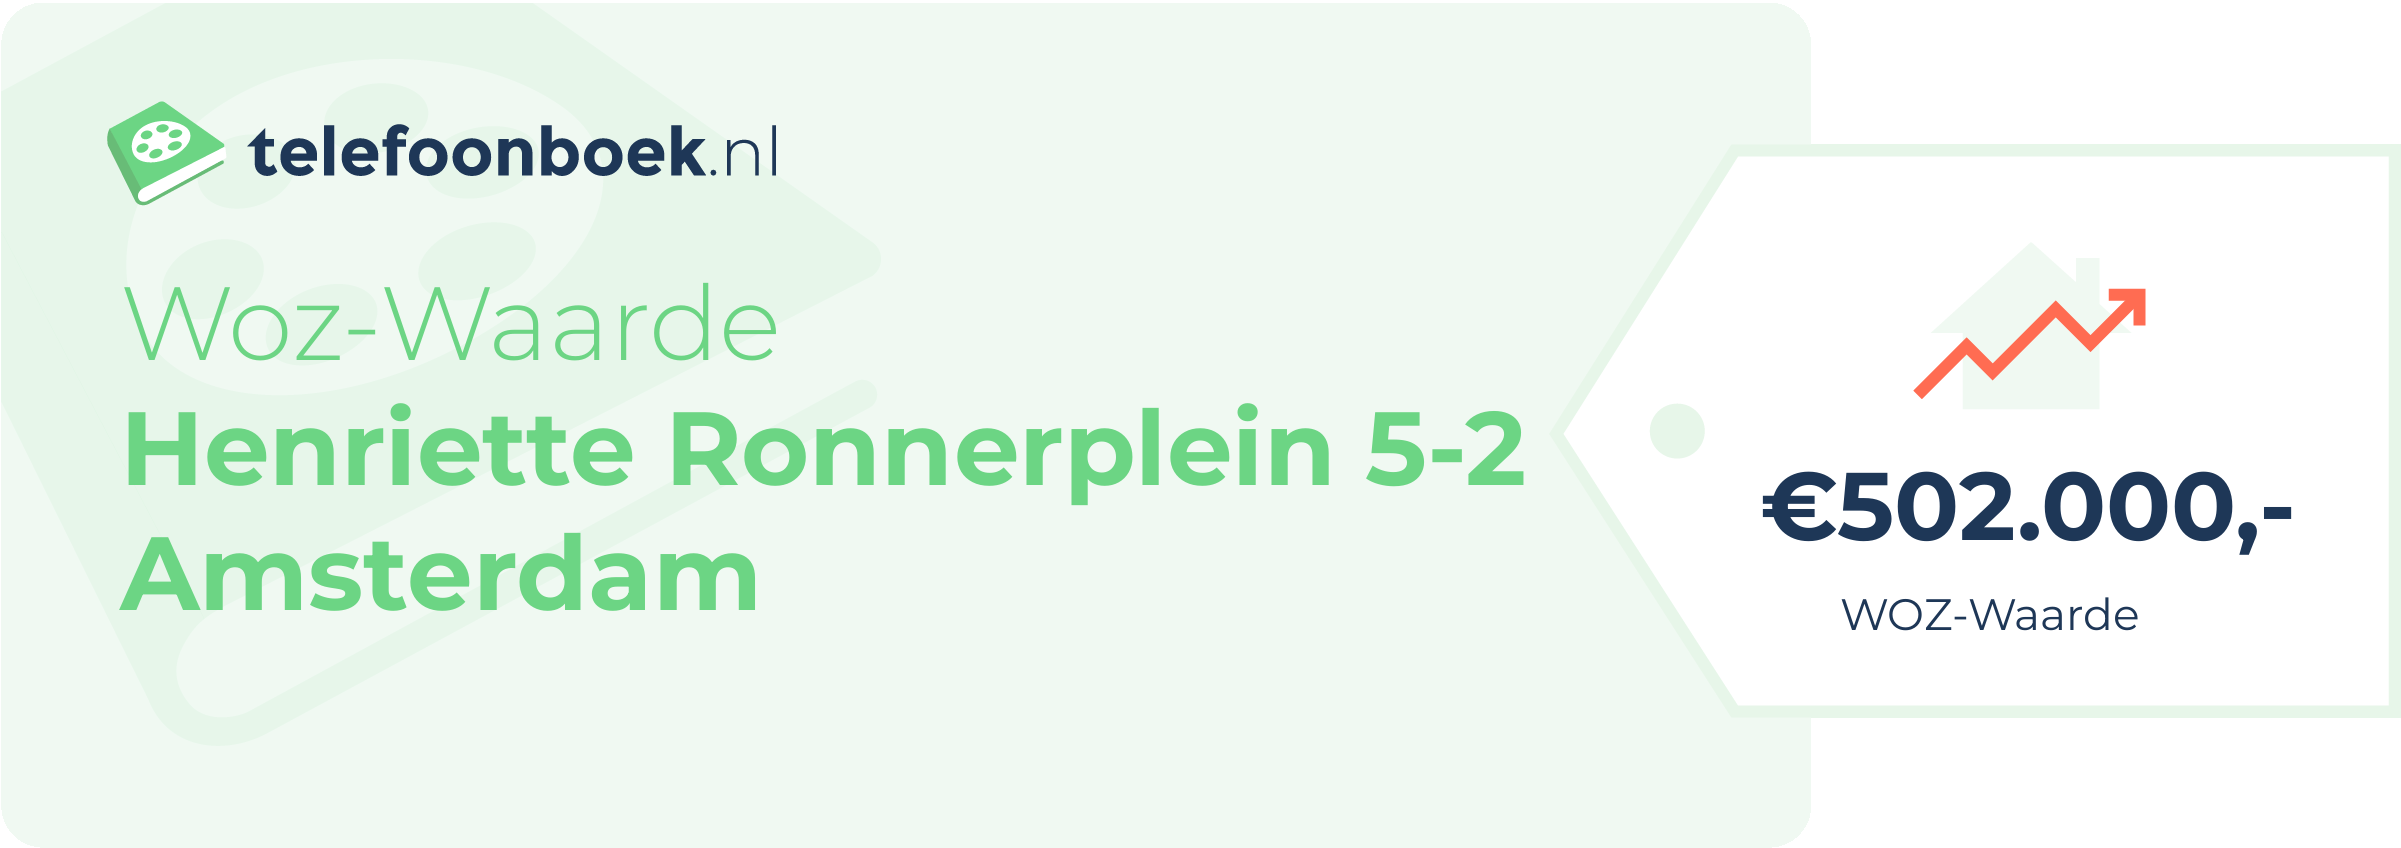 WOZ-waarde Henriette Ronnerplein 5-2 Amsterdam